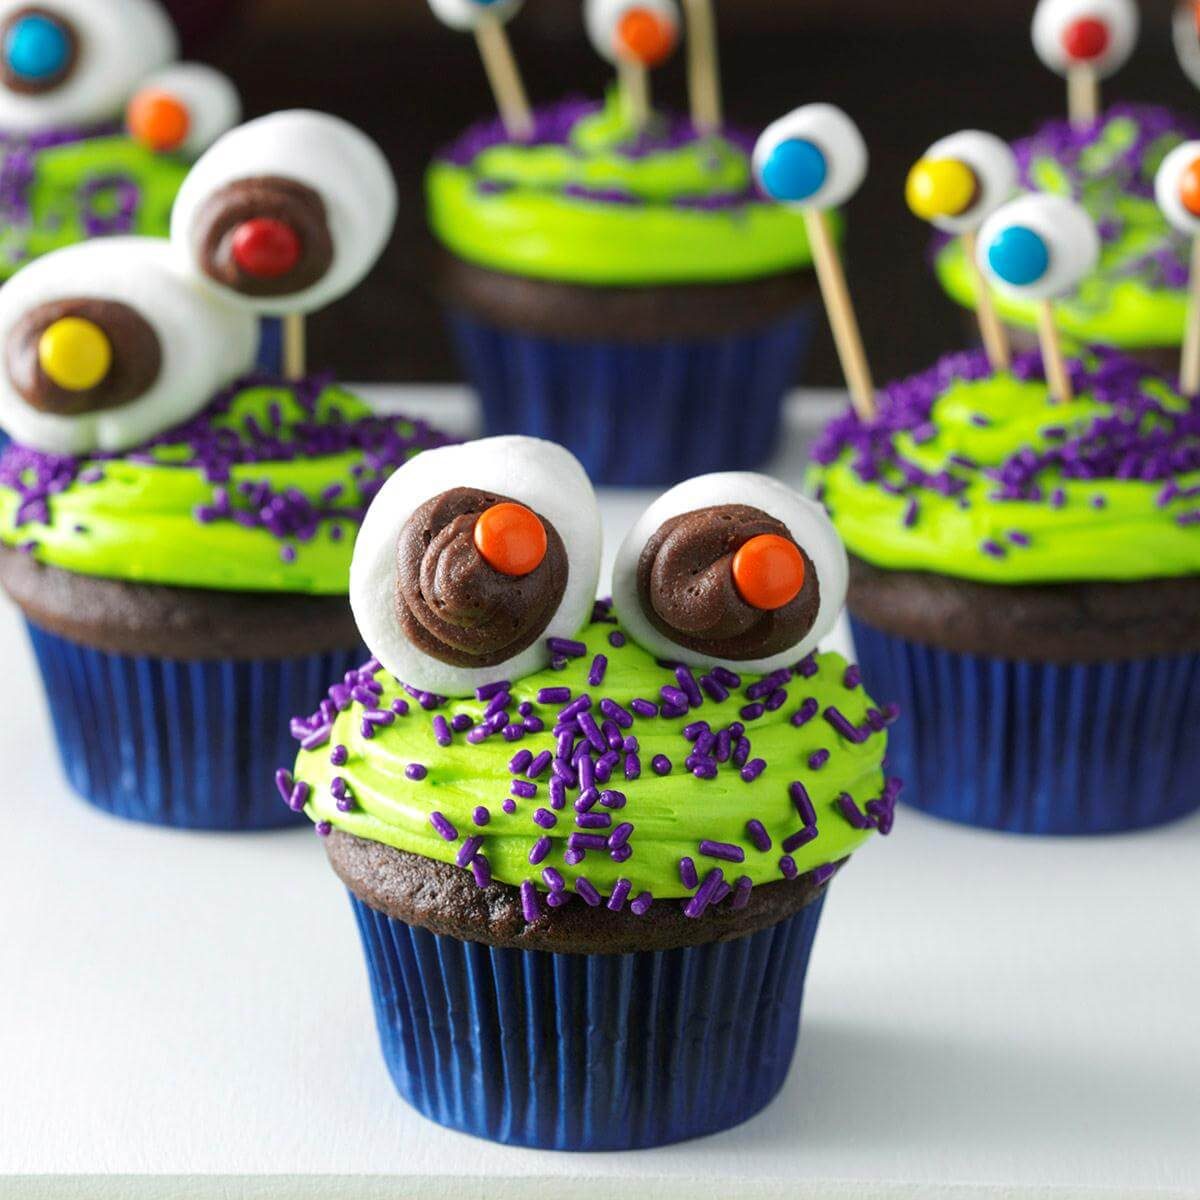 21 Super Fun Cupcake Ideas for Kids | Taste of Home